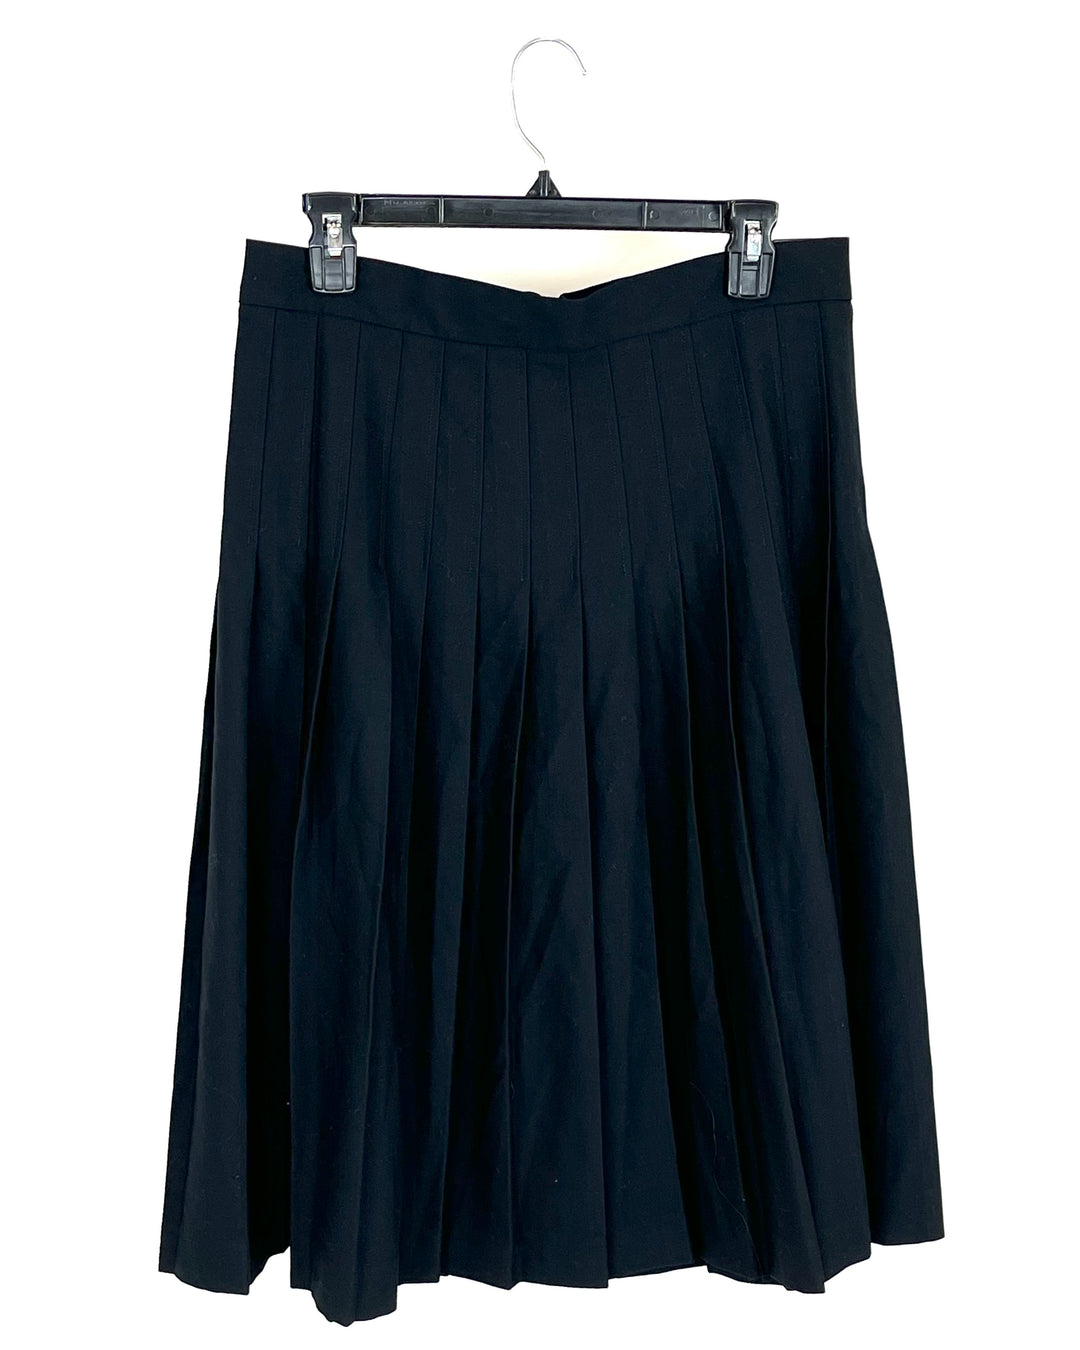 Black Pleated Buckle Skirt - Size 8